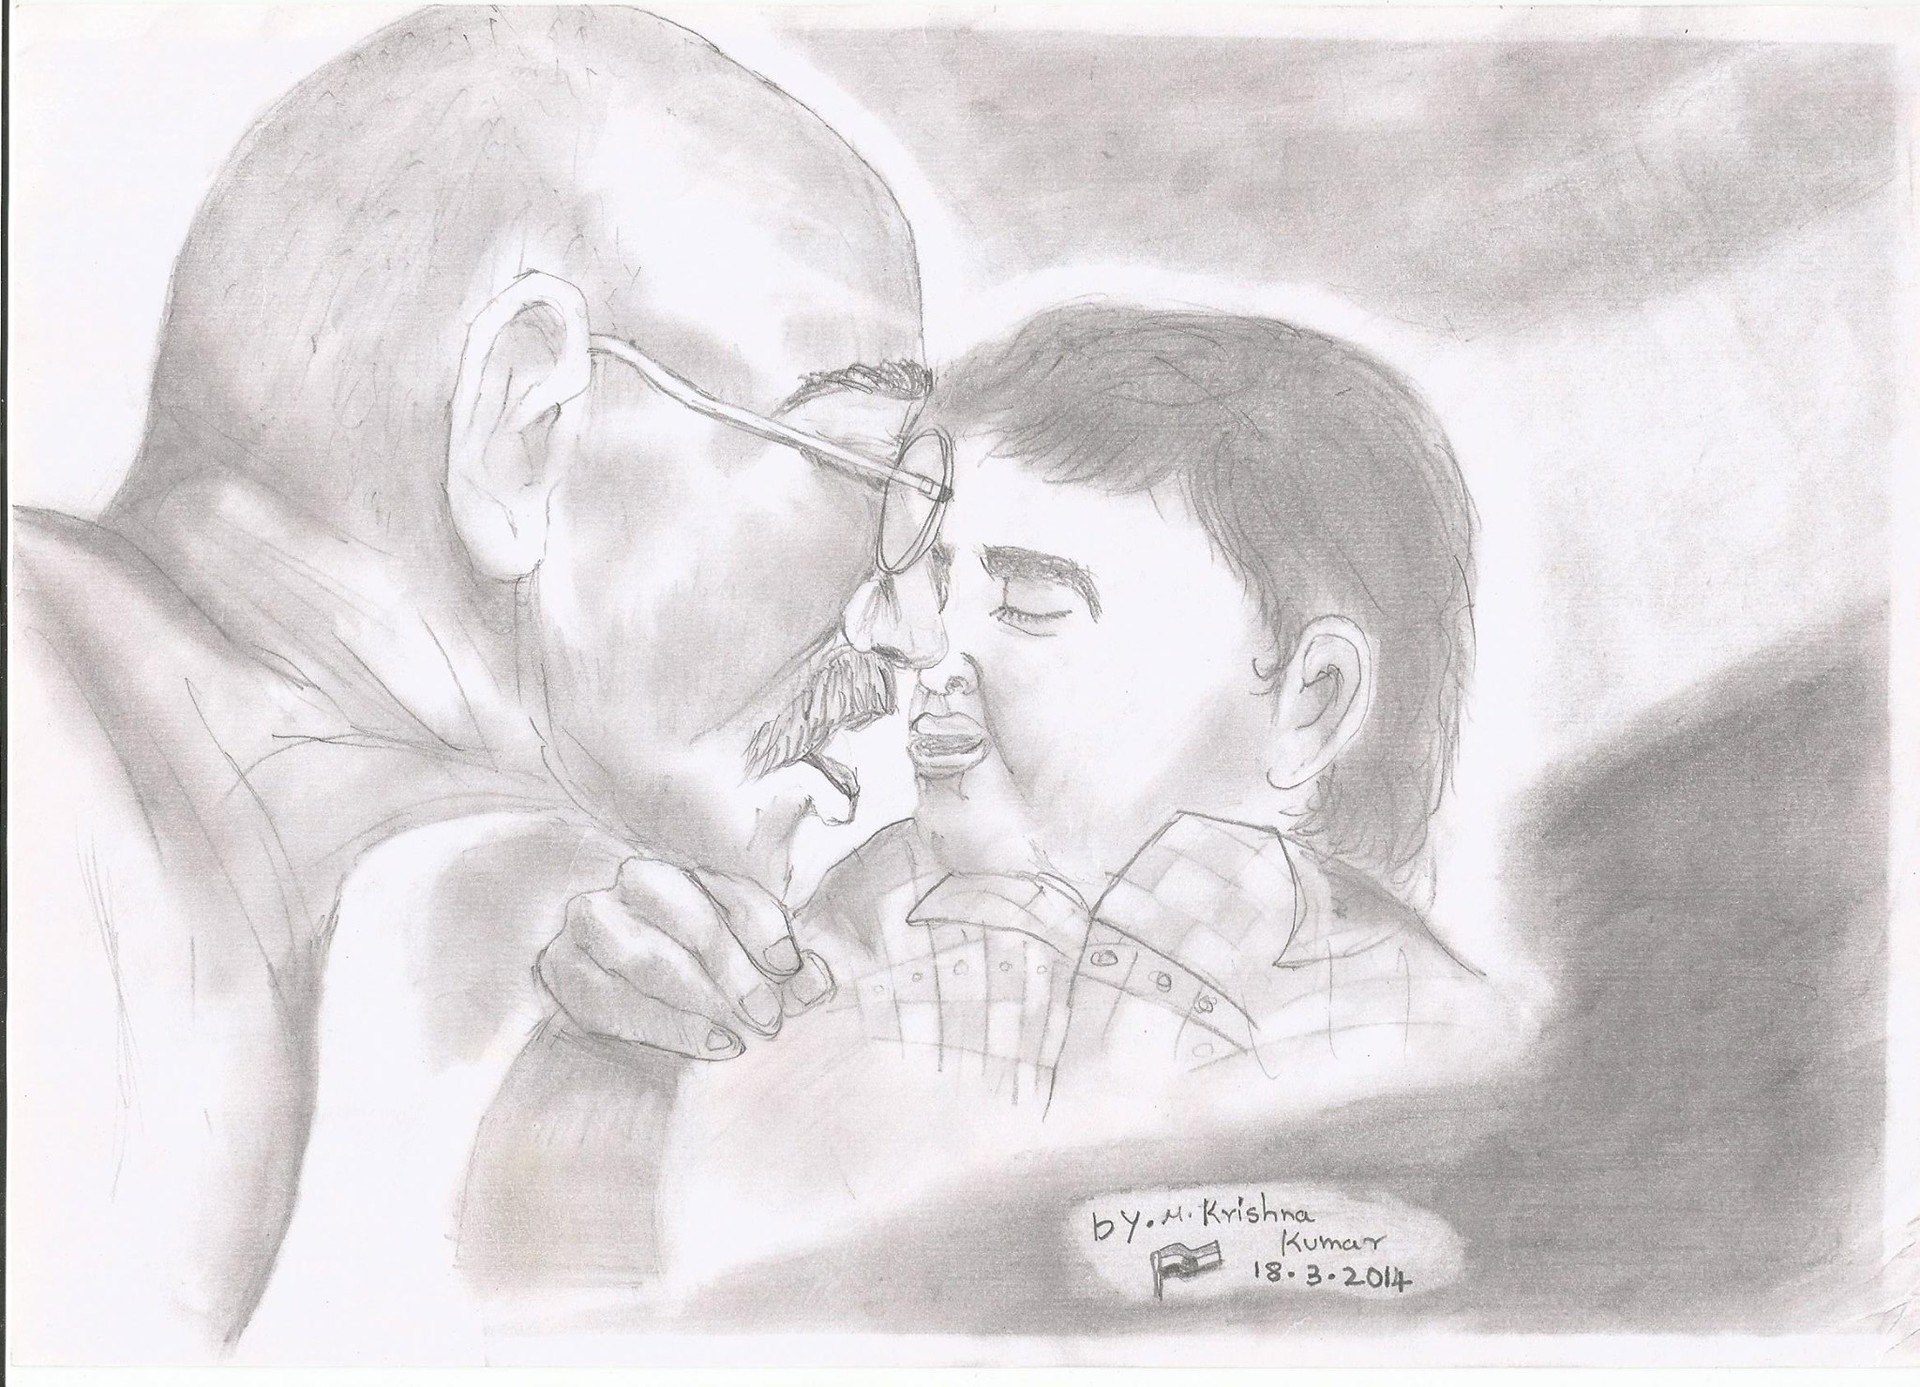  Pencil Sketch Of Mahatma Gandhi at PaintingValley.com Explore 